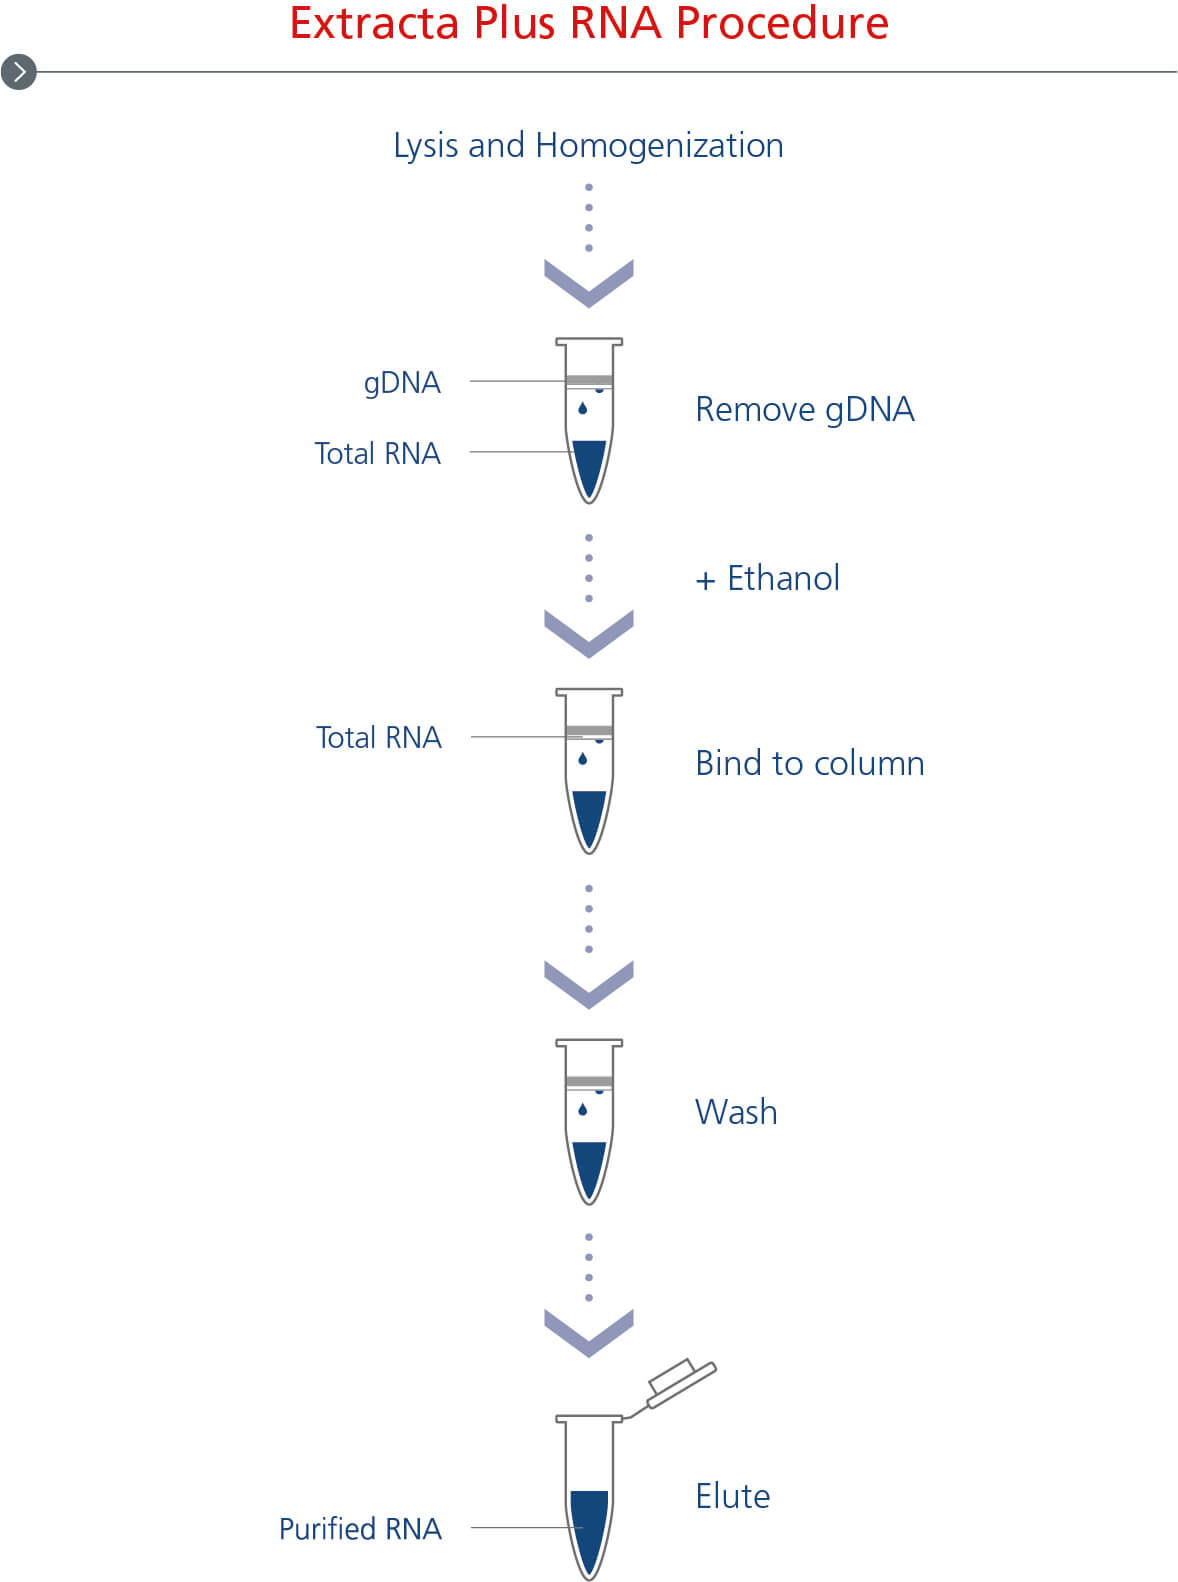 Extracta Plus RNA complete workflow